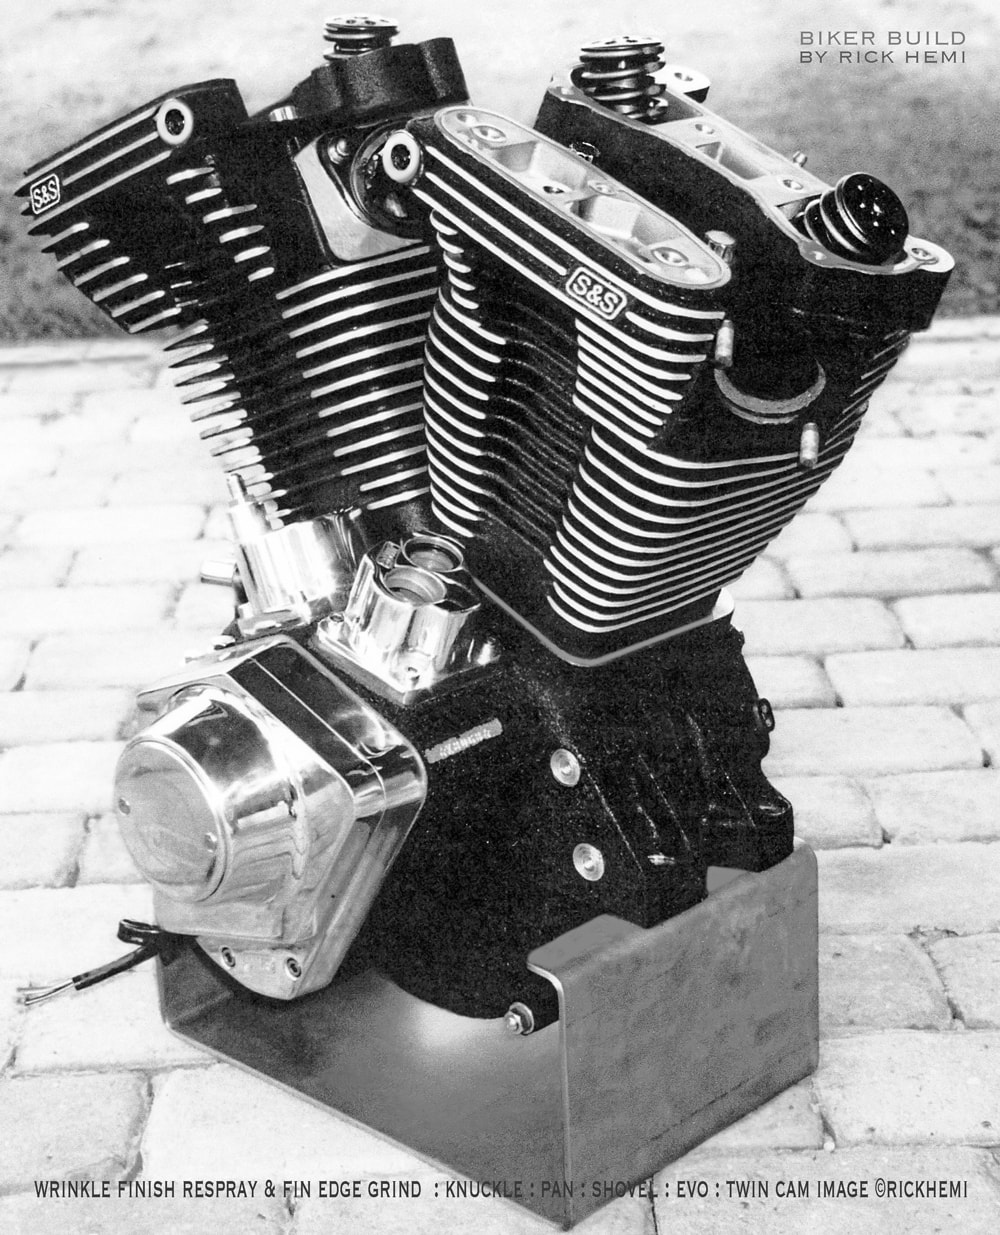 Respraying Big Twin Harley engines, VHT wrinkle finish on Big Twin HD engines, image by Rick Hemi 